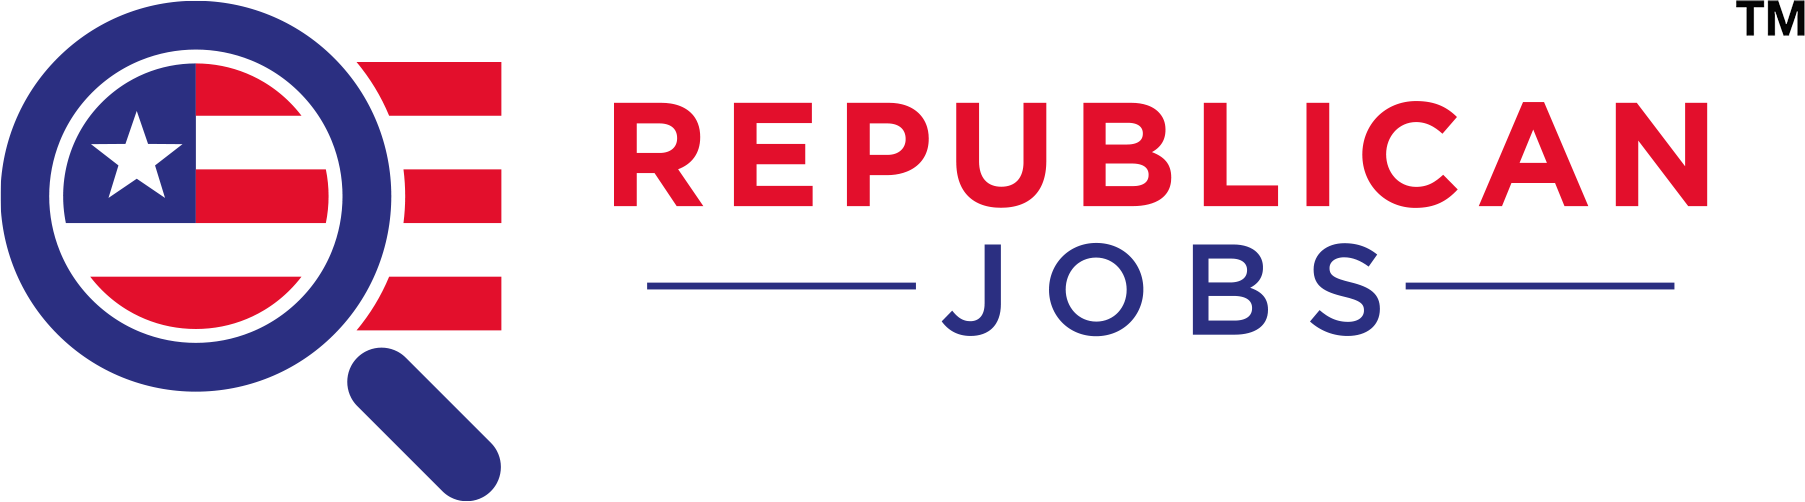 Republican jobs in Yuma Arizona jobs